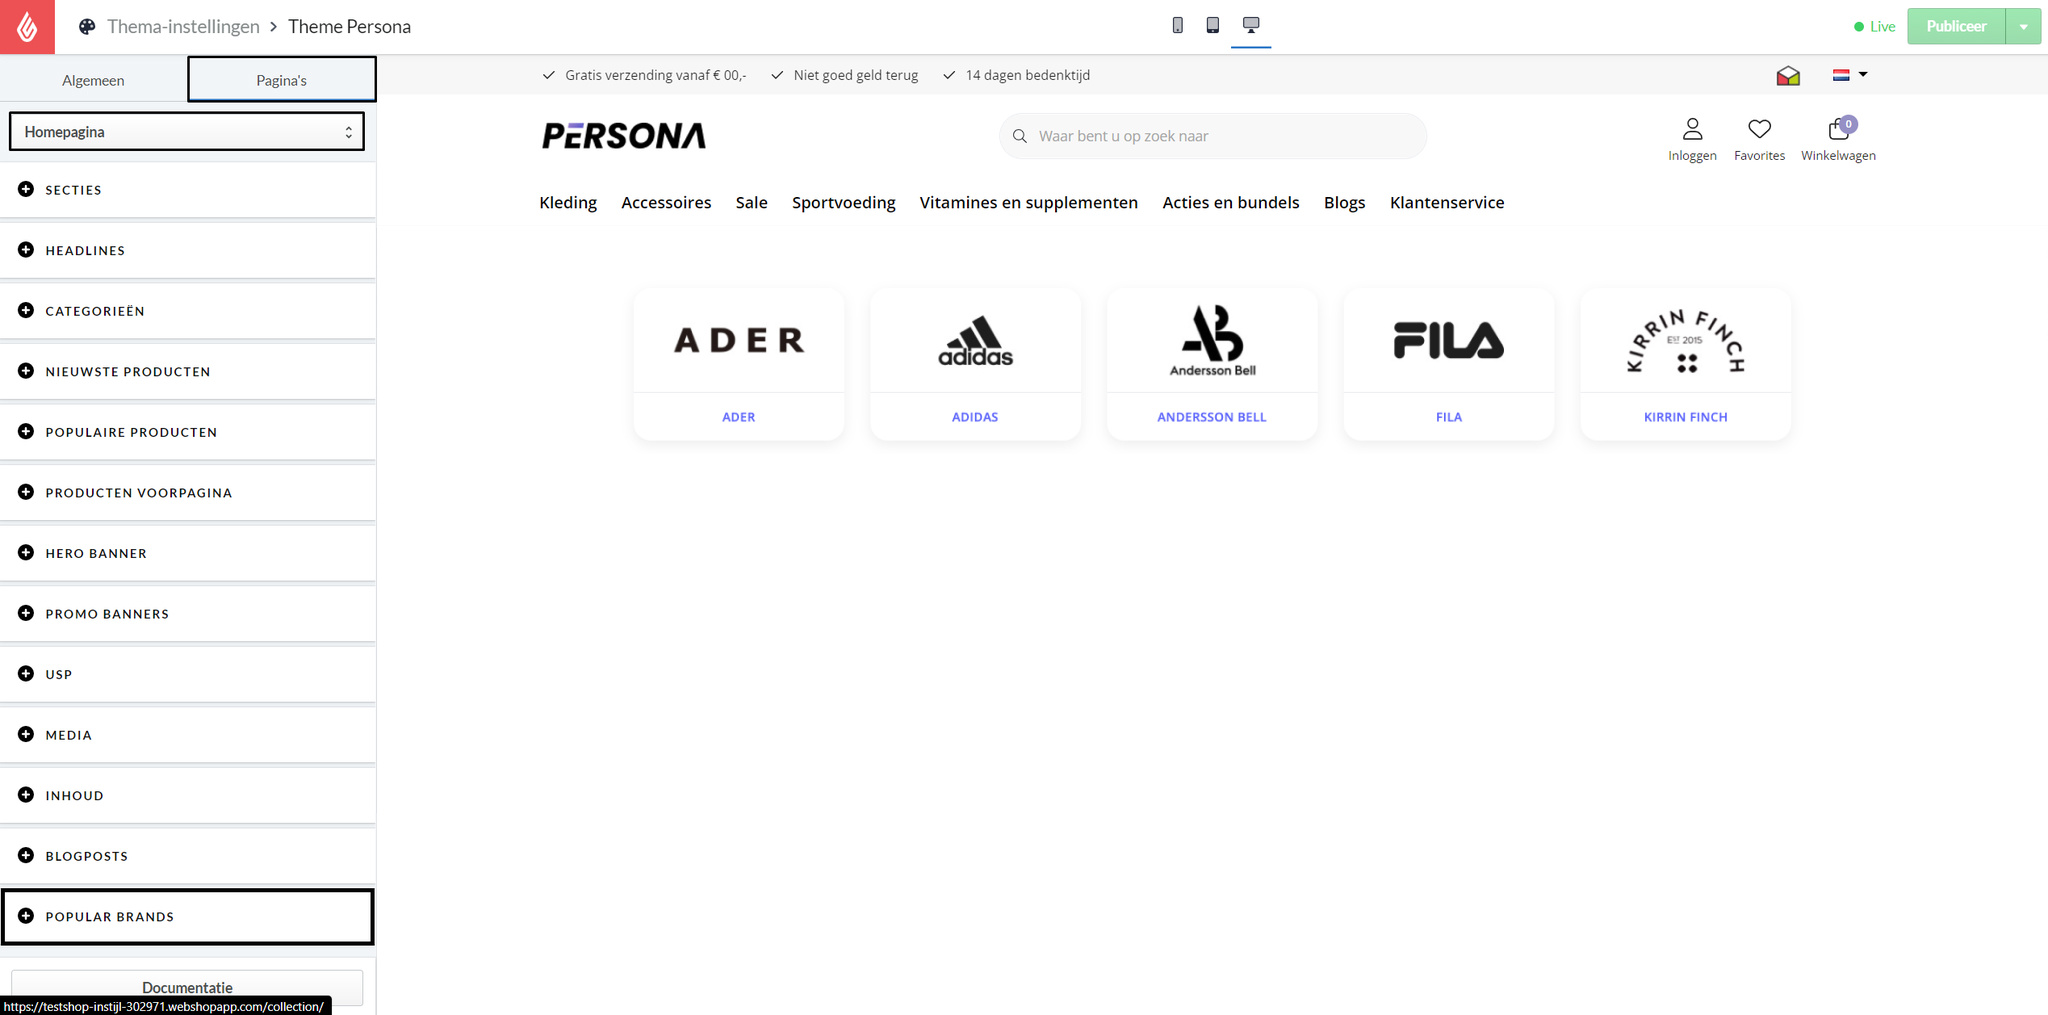 Theme Persona Homepage Brands